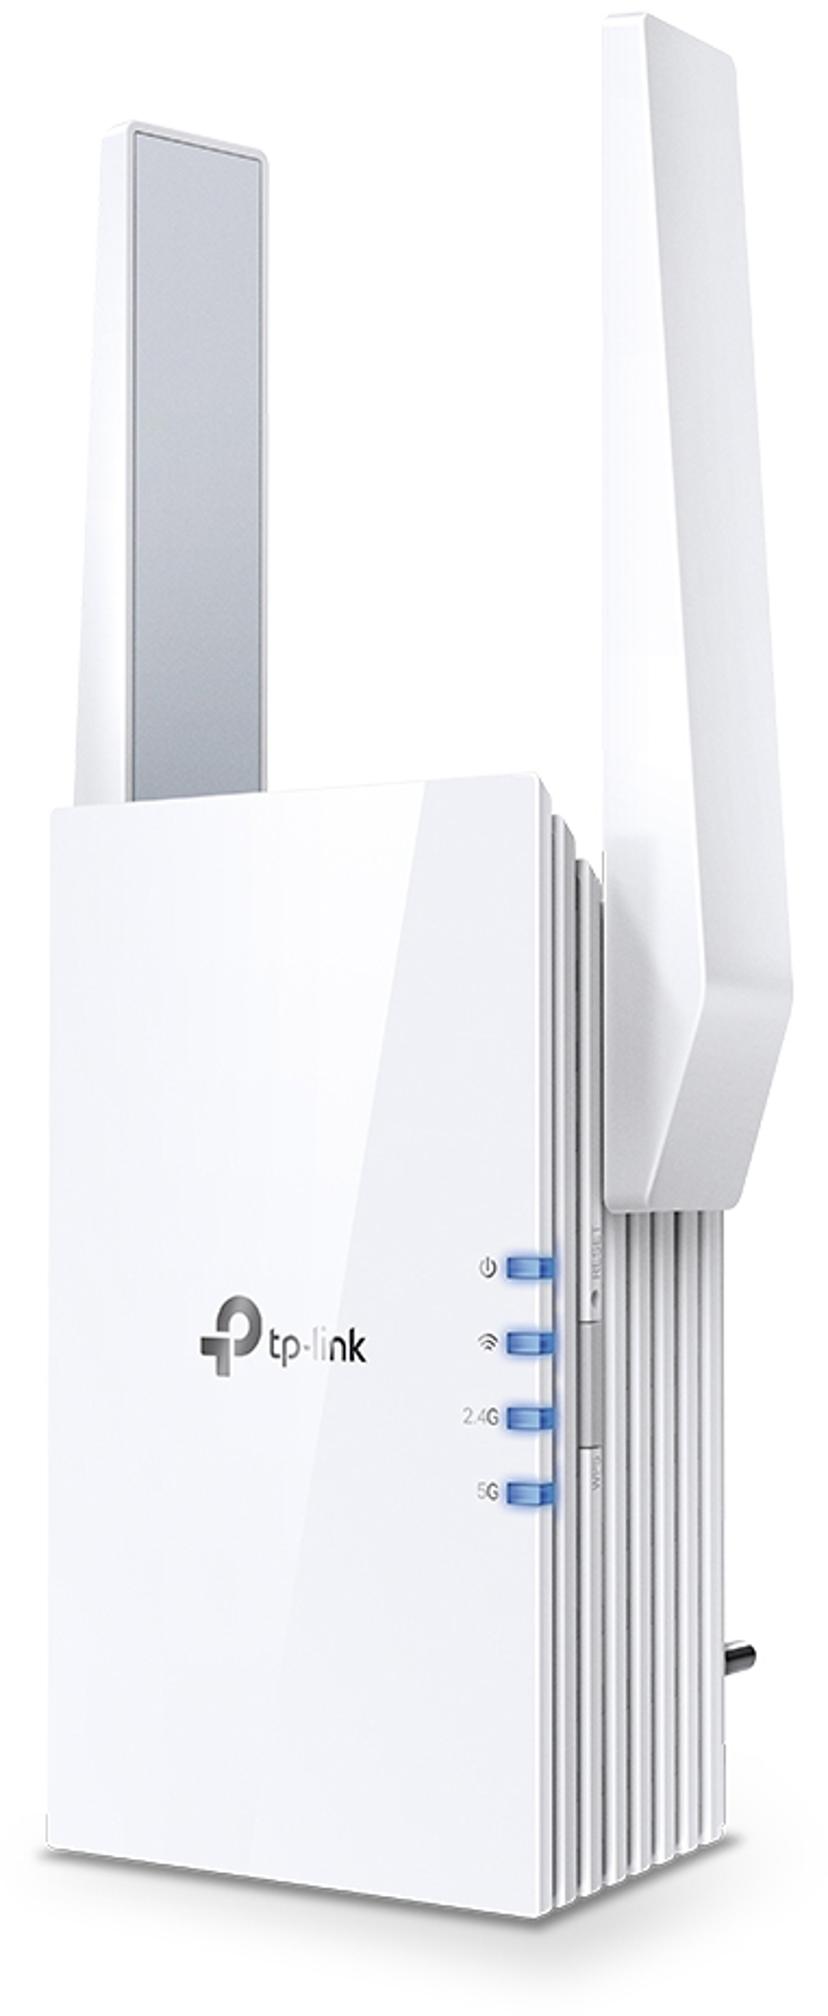 TP-Link RE605X AX1800 Wi-Fi 6 Range Extender